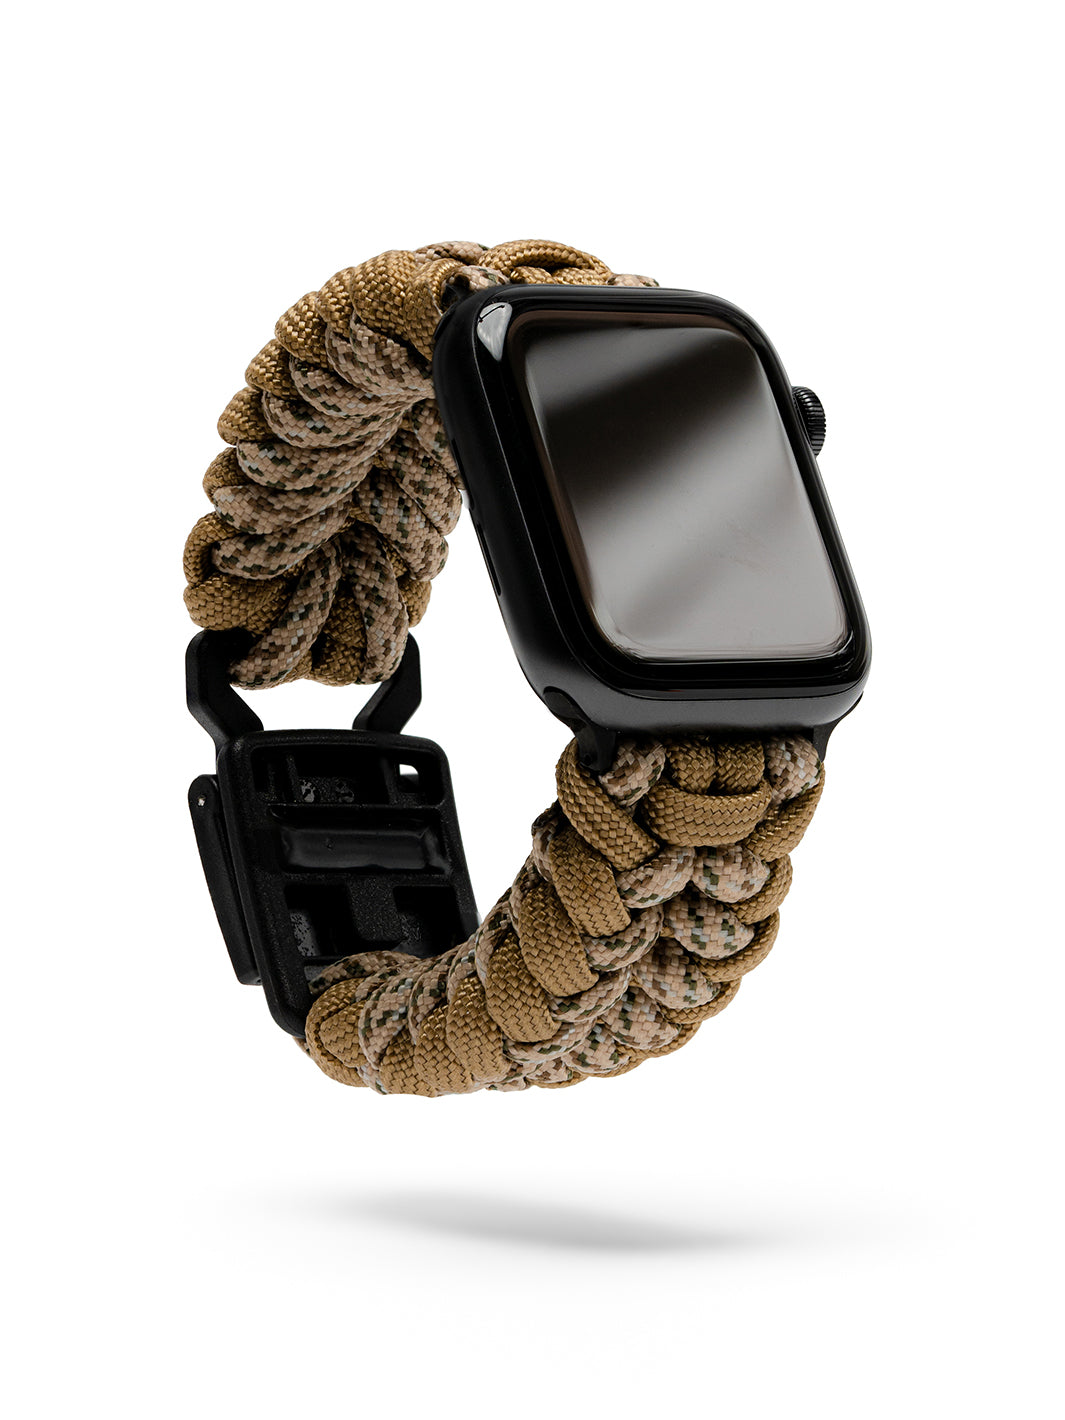 Strapcord Ribs Apple Watch Strap Article 006 Desert Camo 1 1065 x 1420